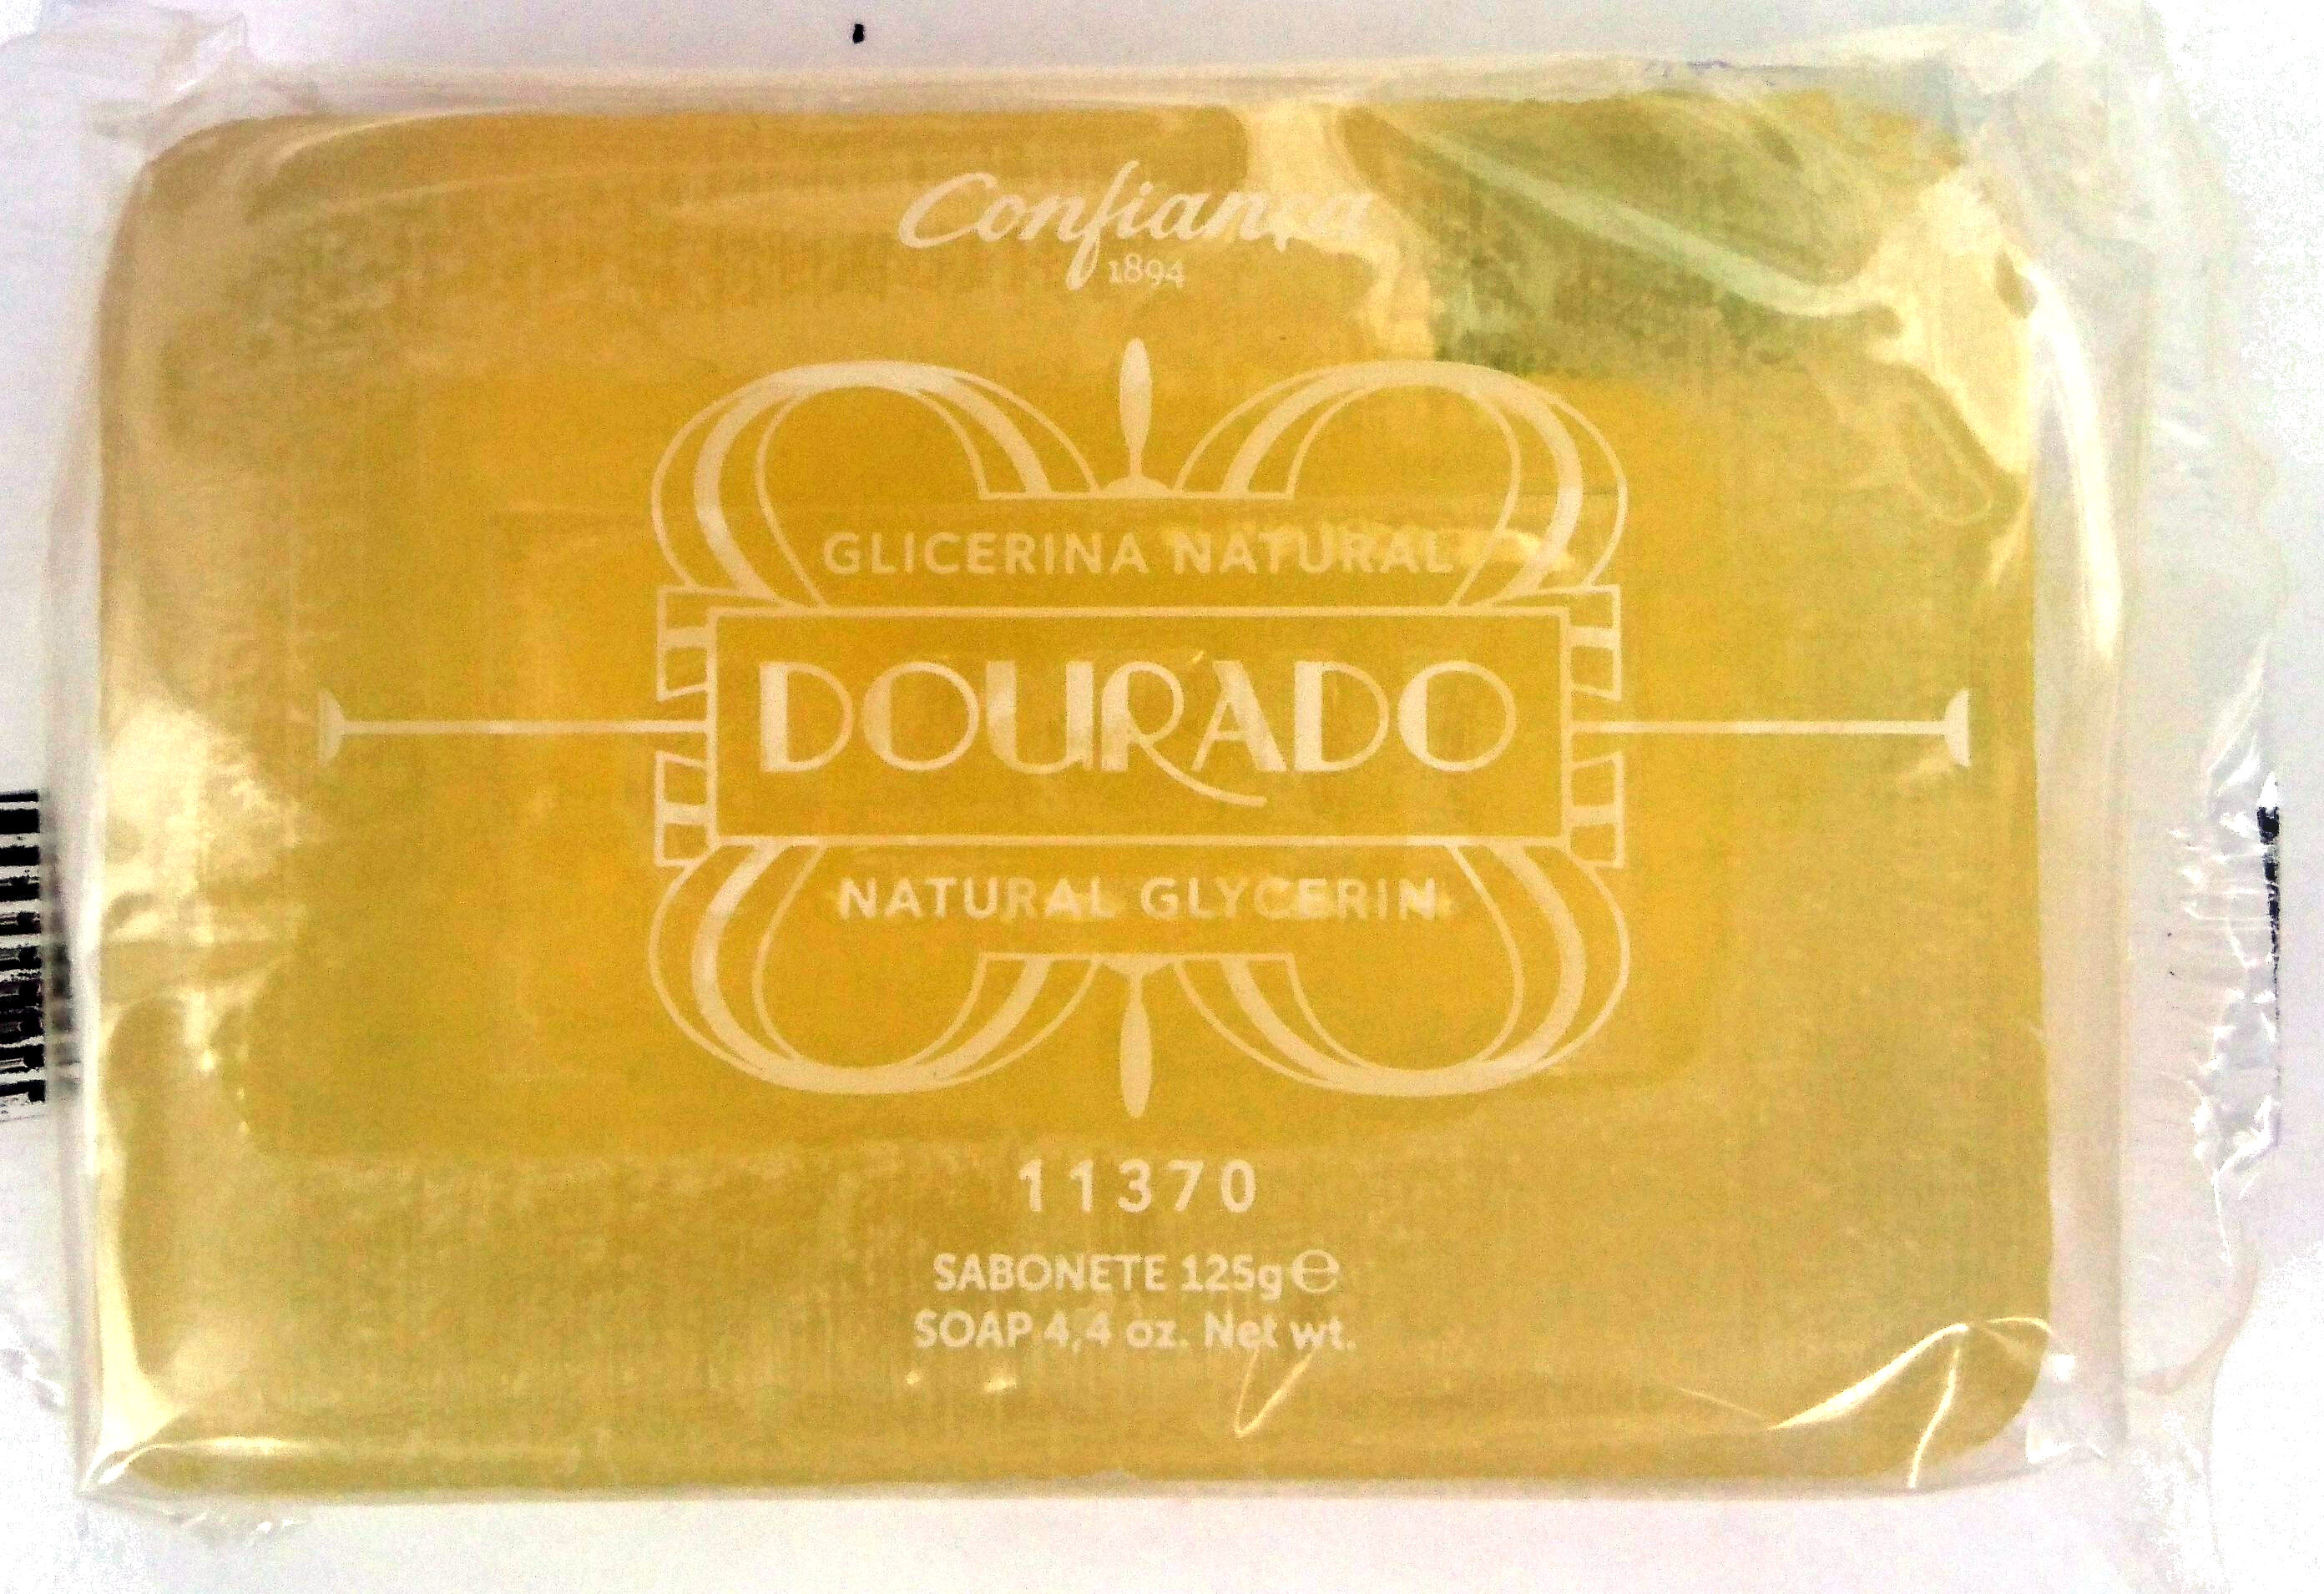 Glicerina natural dourado - Produto - pt